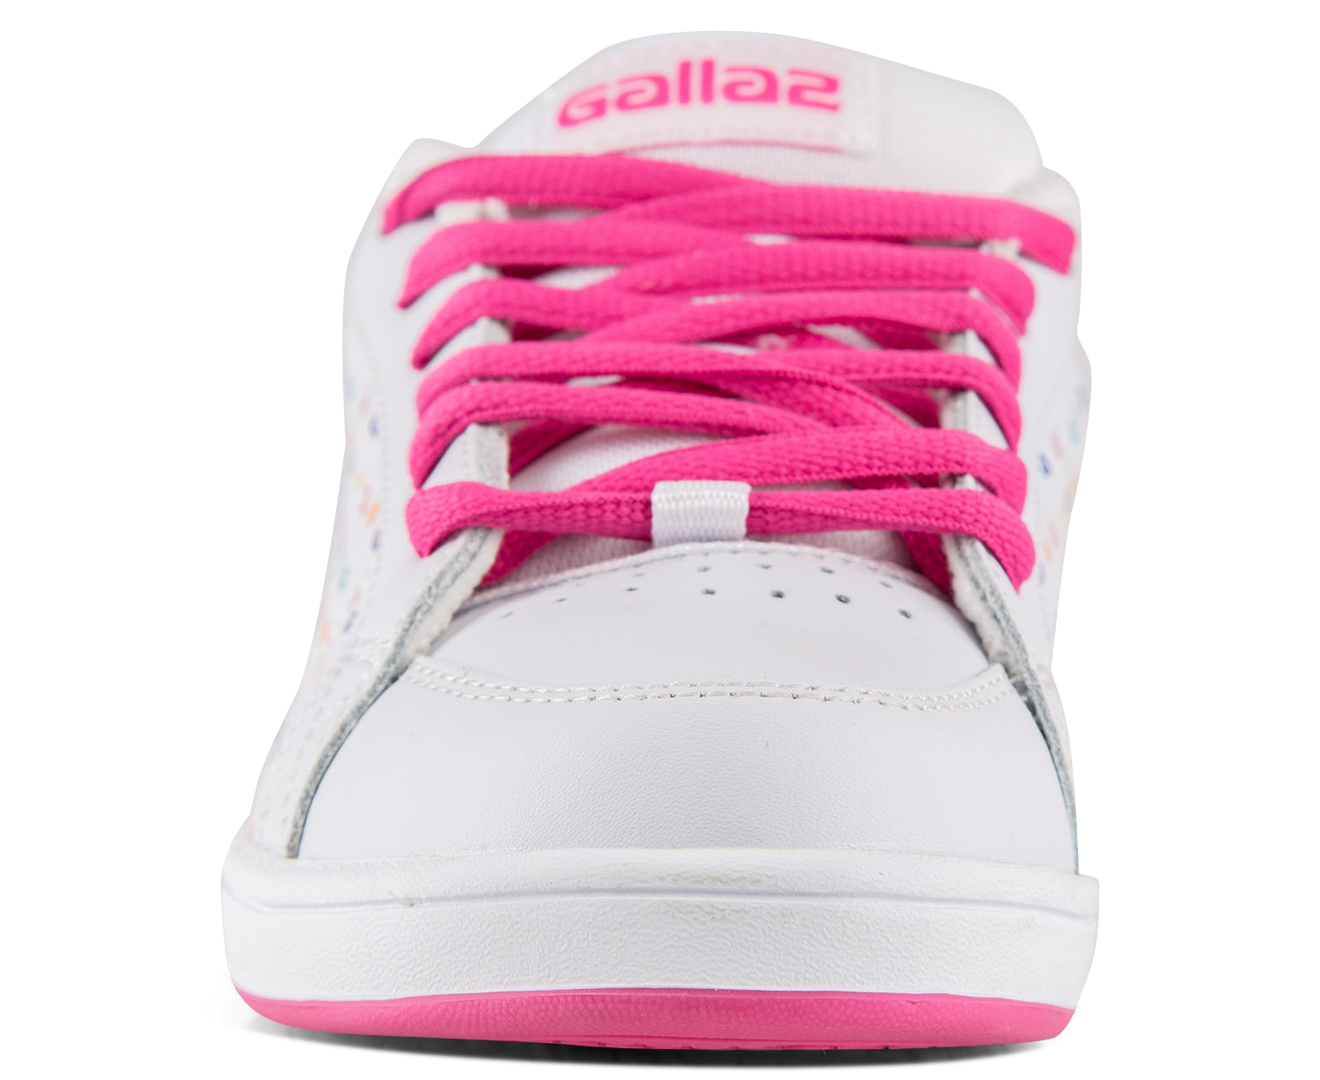 gallaz skate shoes